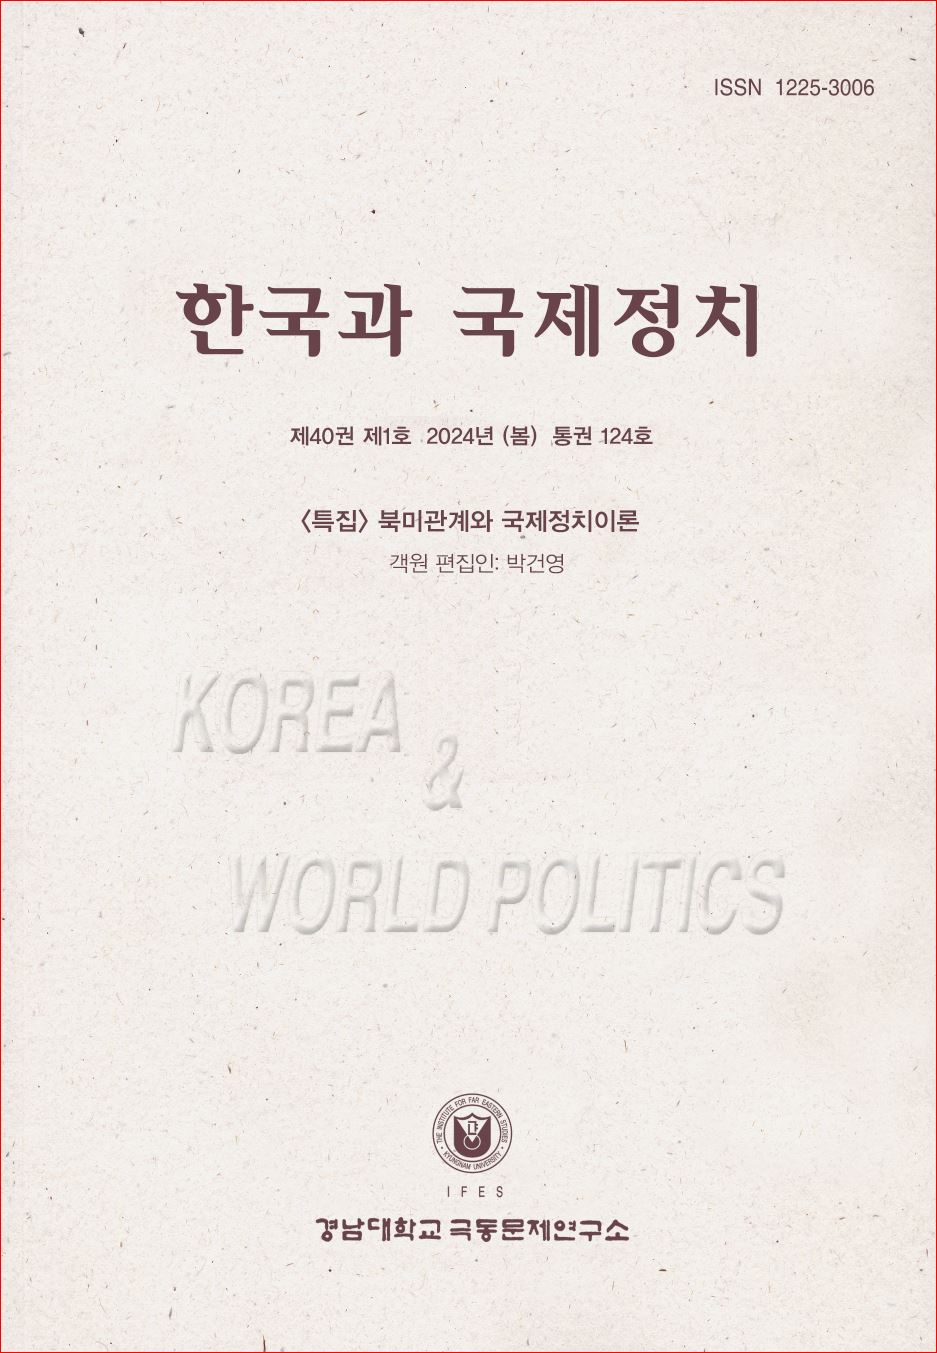 Korea and World Politics, Vol.40, No.1 Published 첨부 이미지